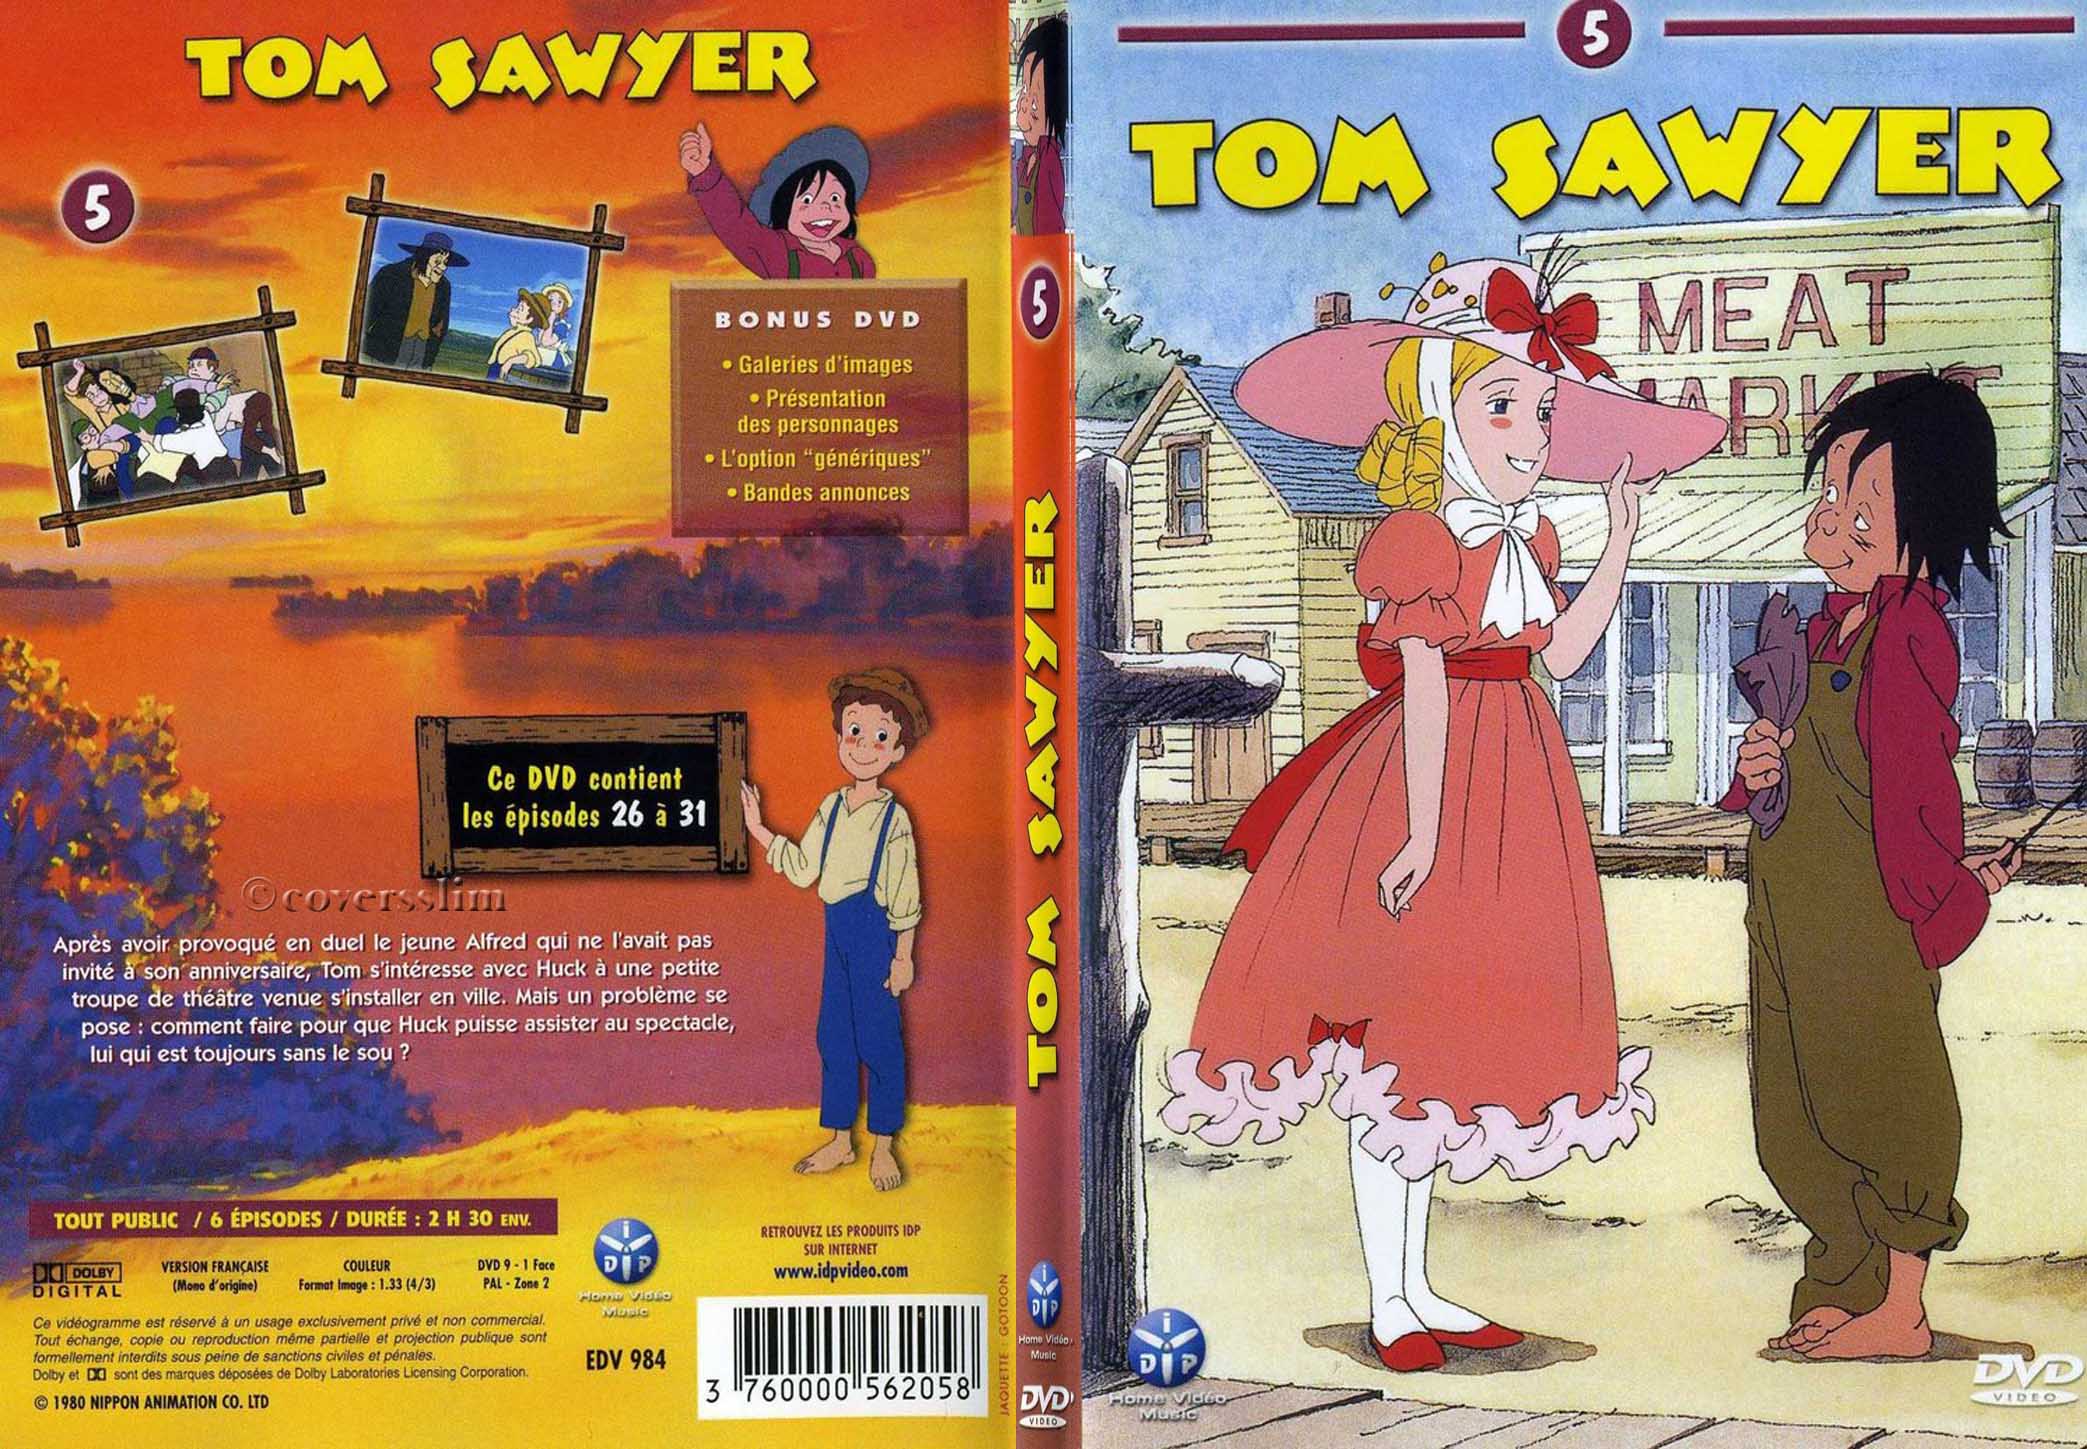 Jaquette DVD Tom Sawyer vol 5 - SLIM